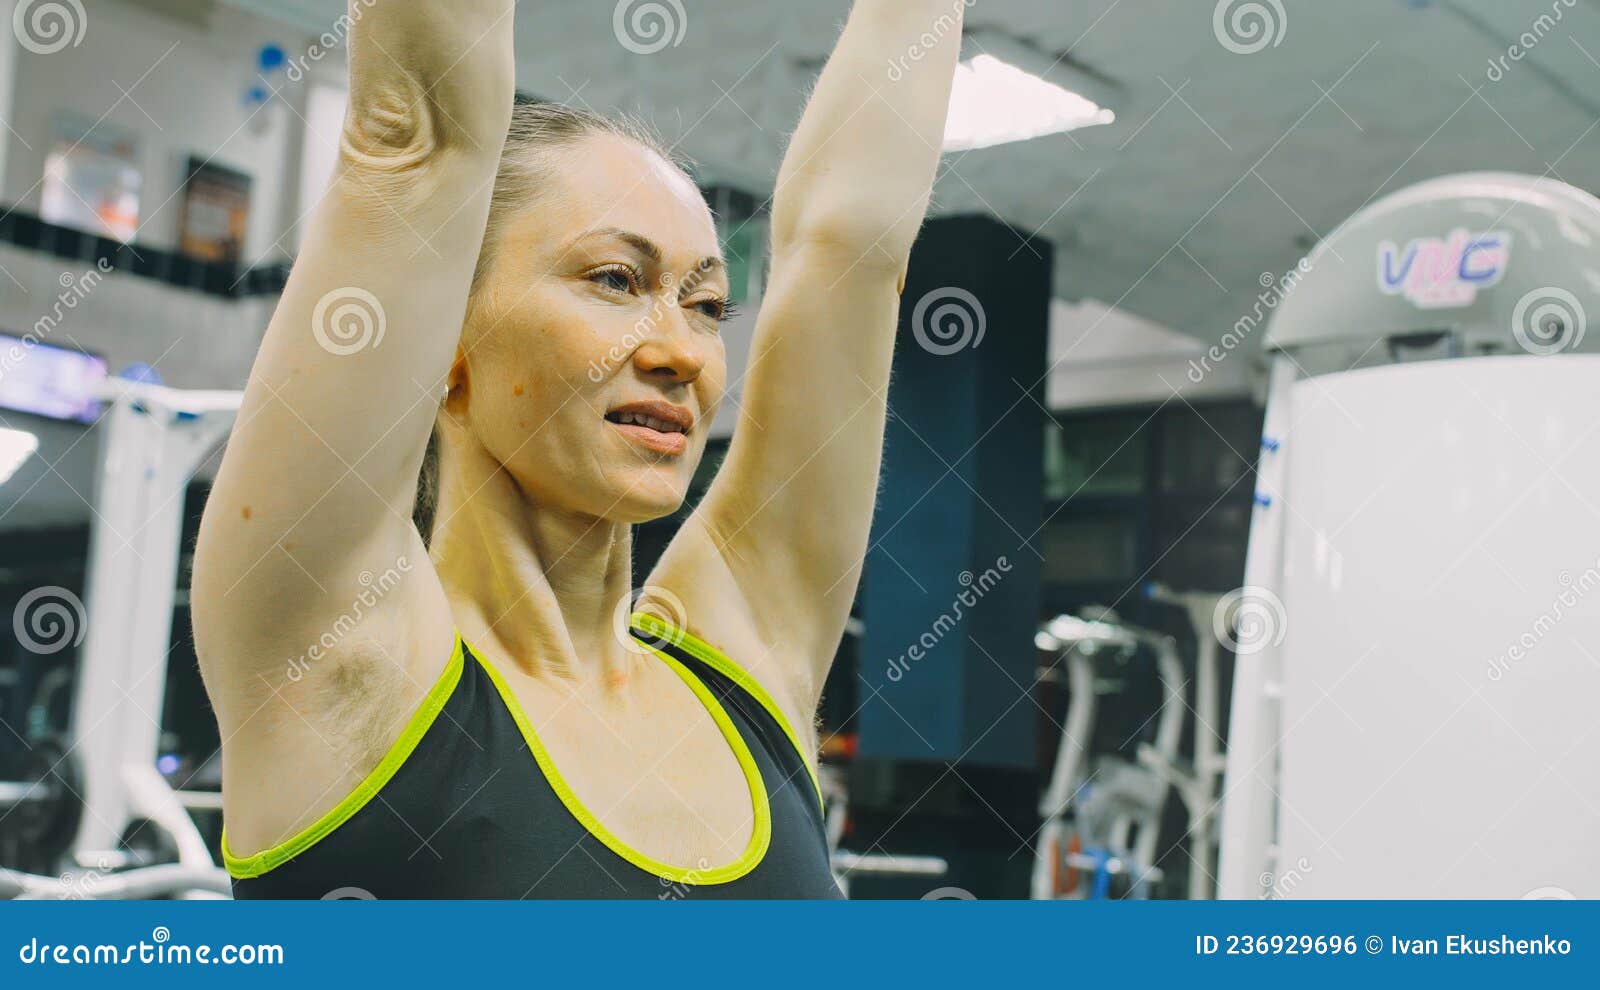 girls hairy armpits sports street gym